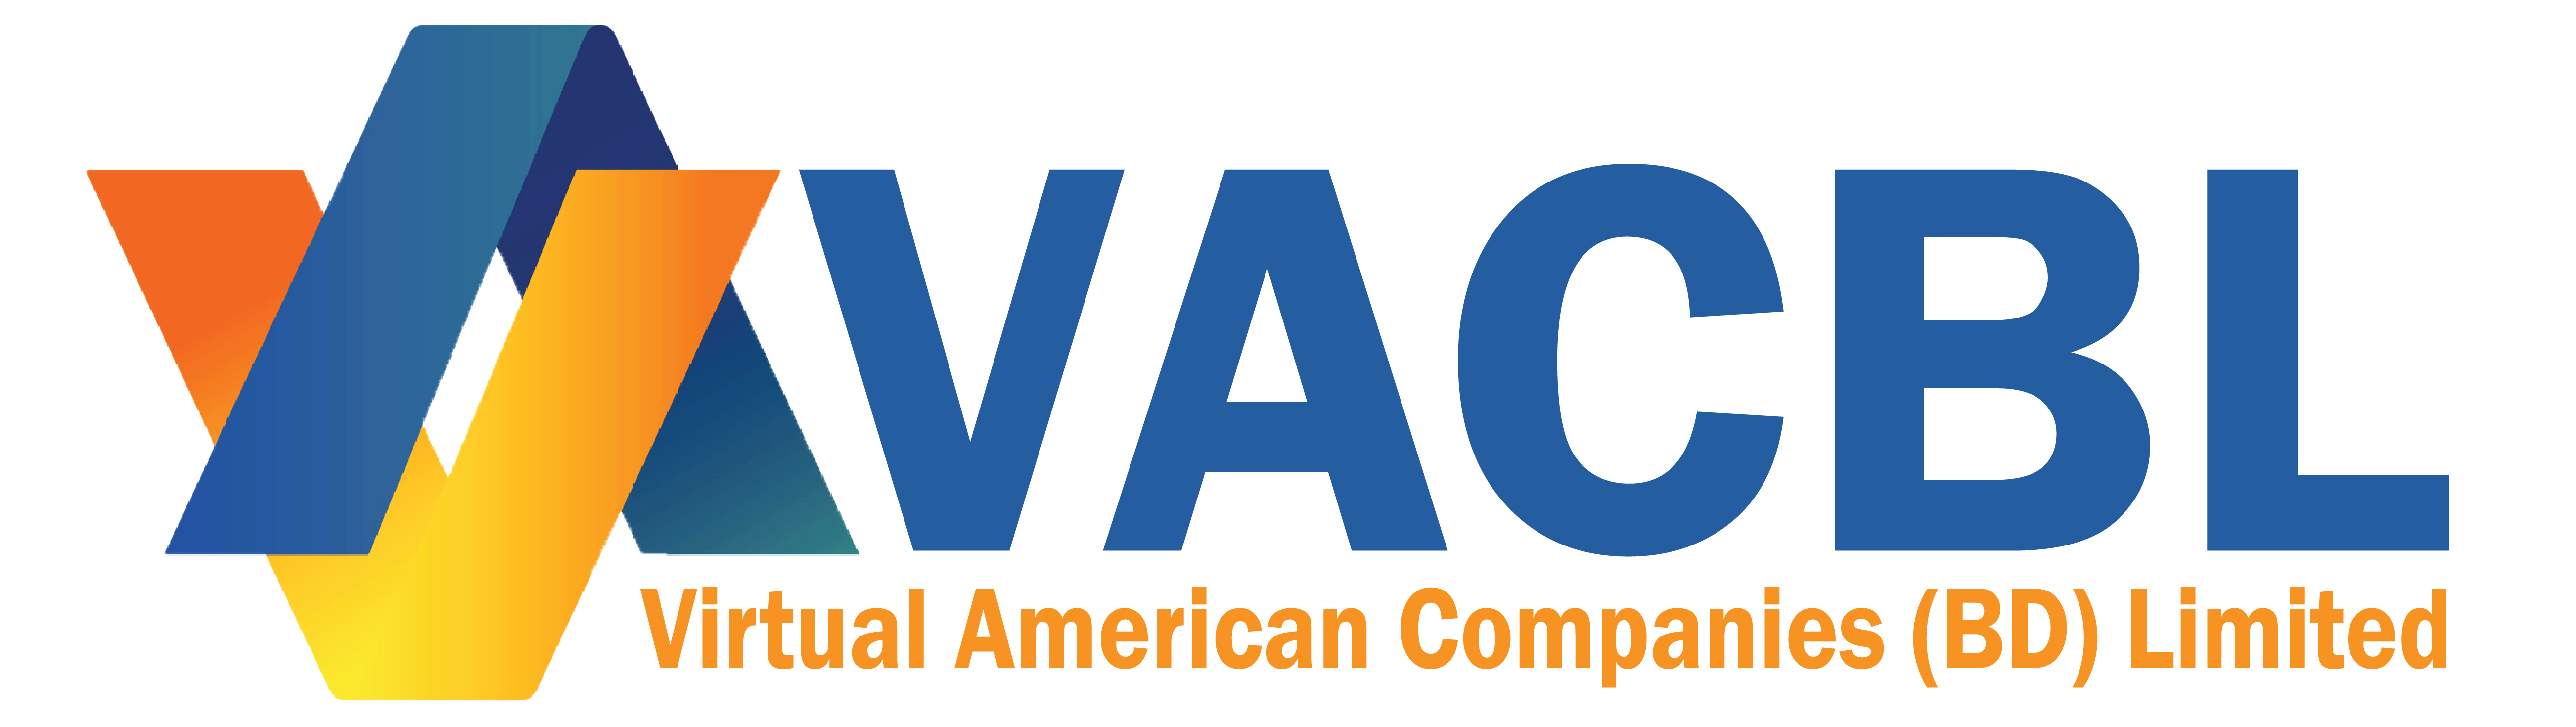 Virtual American Companies (BD) Limited